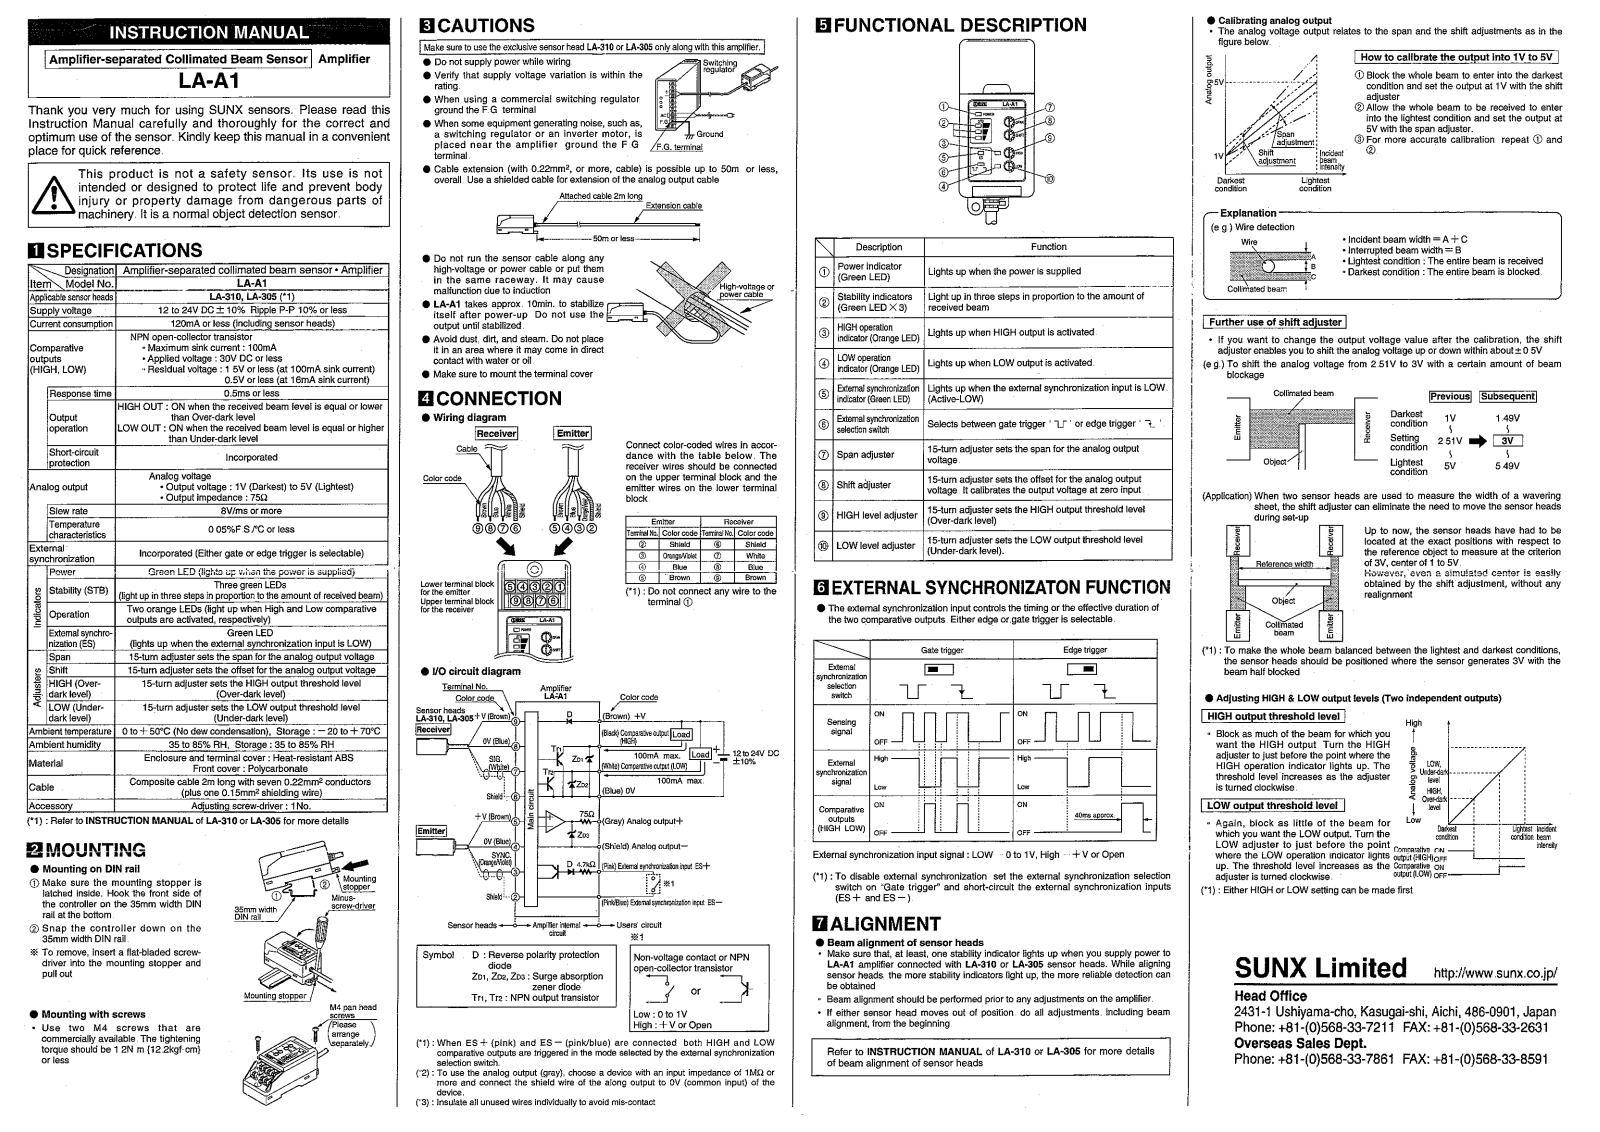 Panasonic LA-A1 Installation  Manual